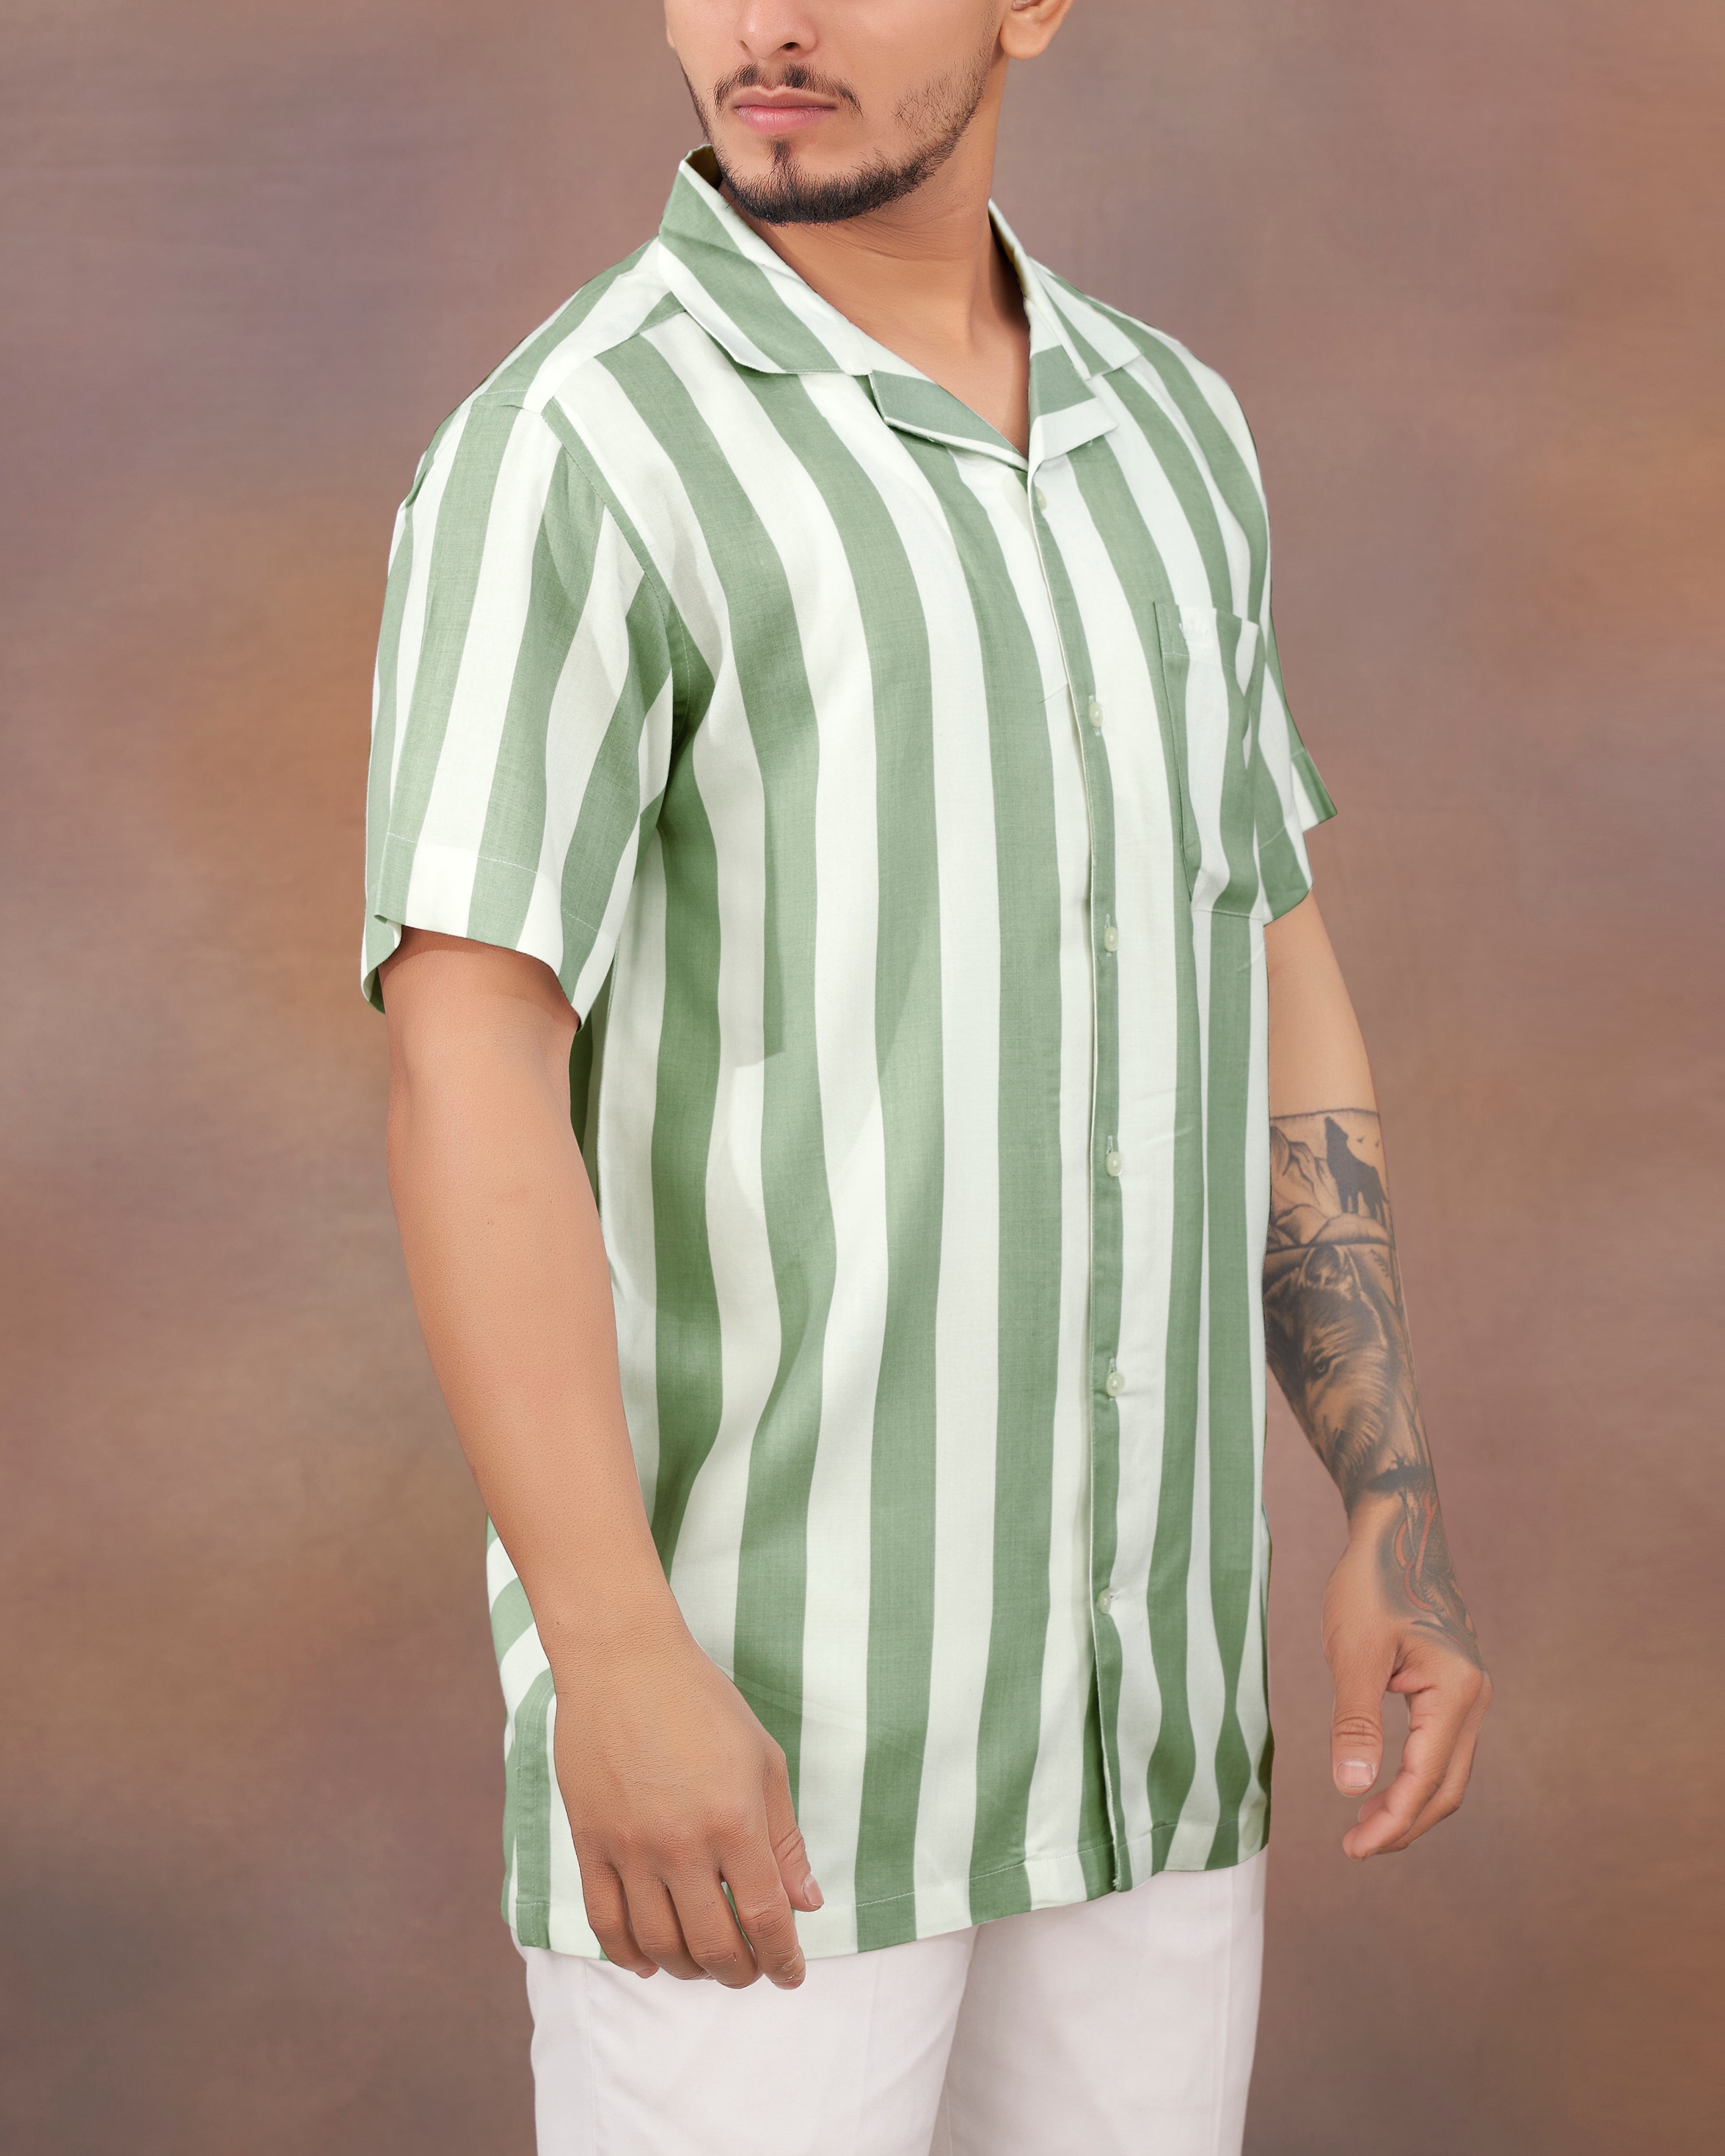 Coriander Green with Bright White Striped Premium Tencel Shirt